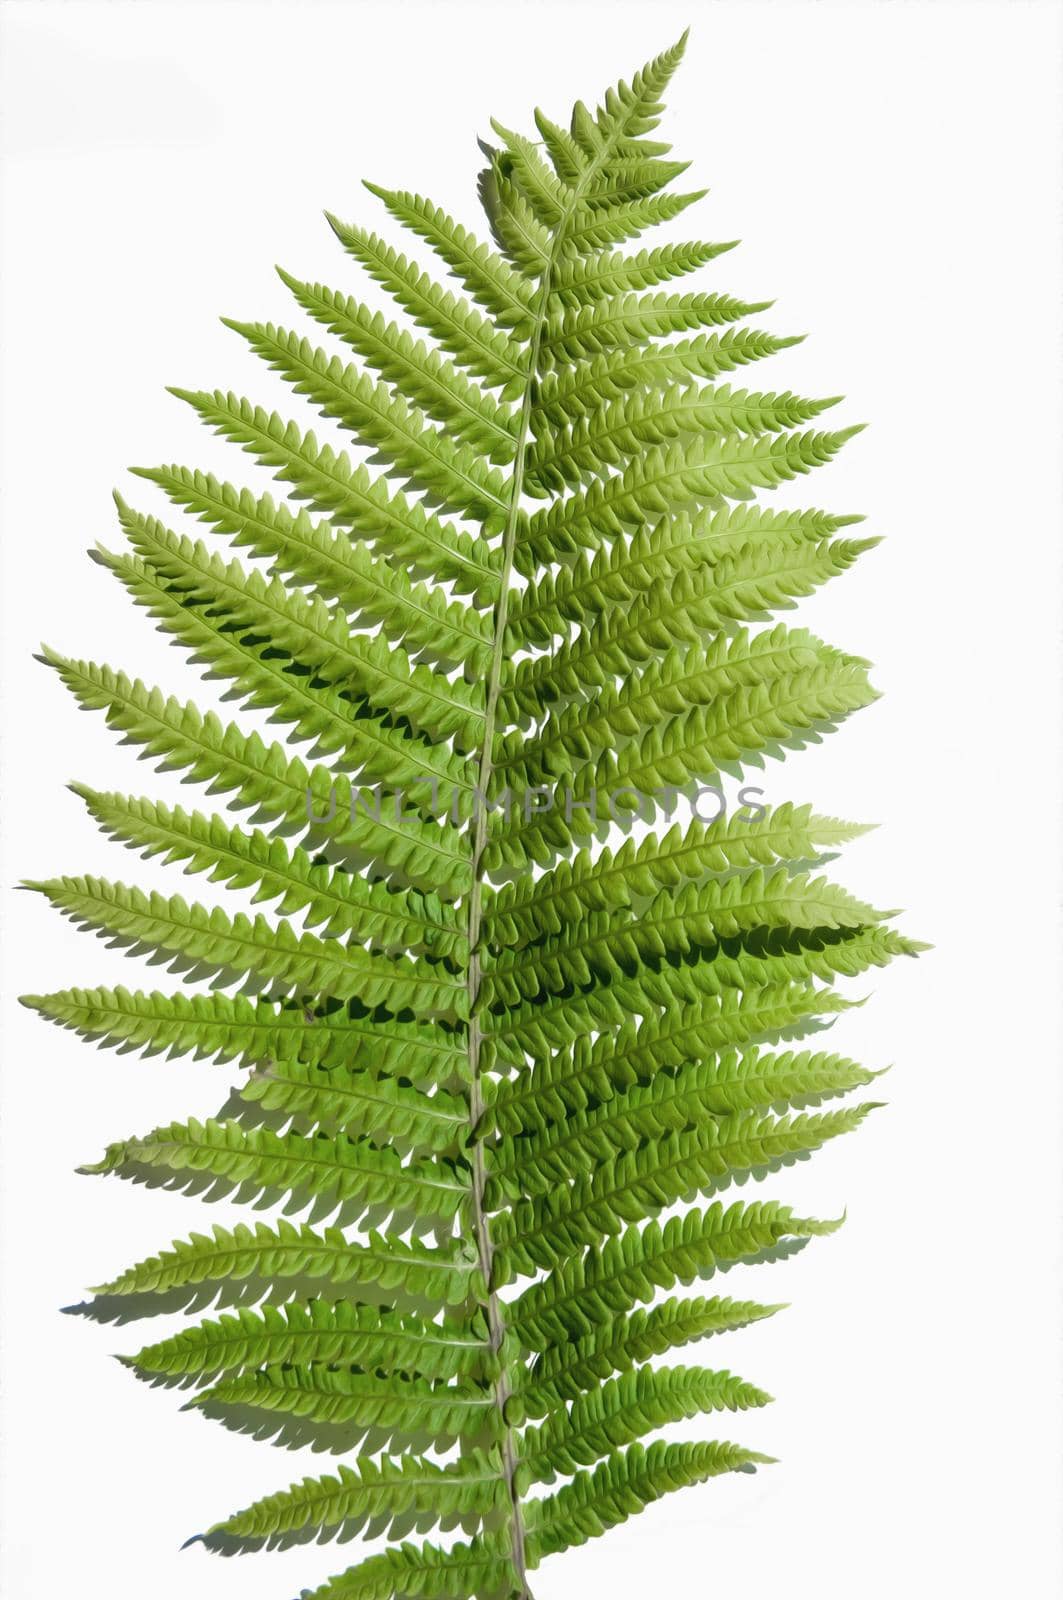 minimalism style, fern leaf on paper background by ozornina